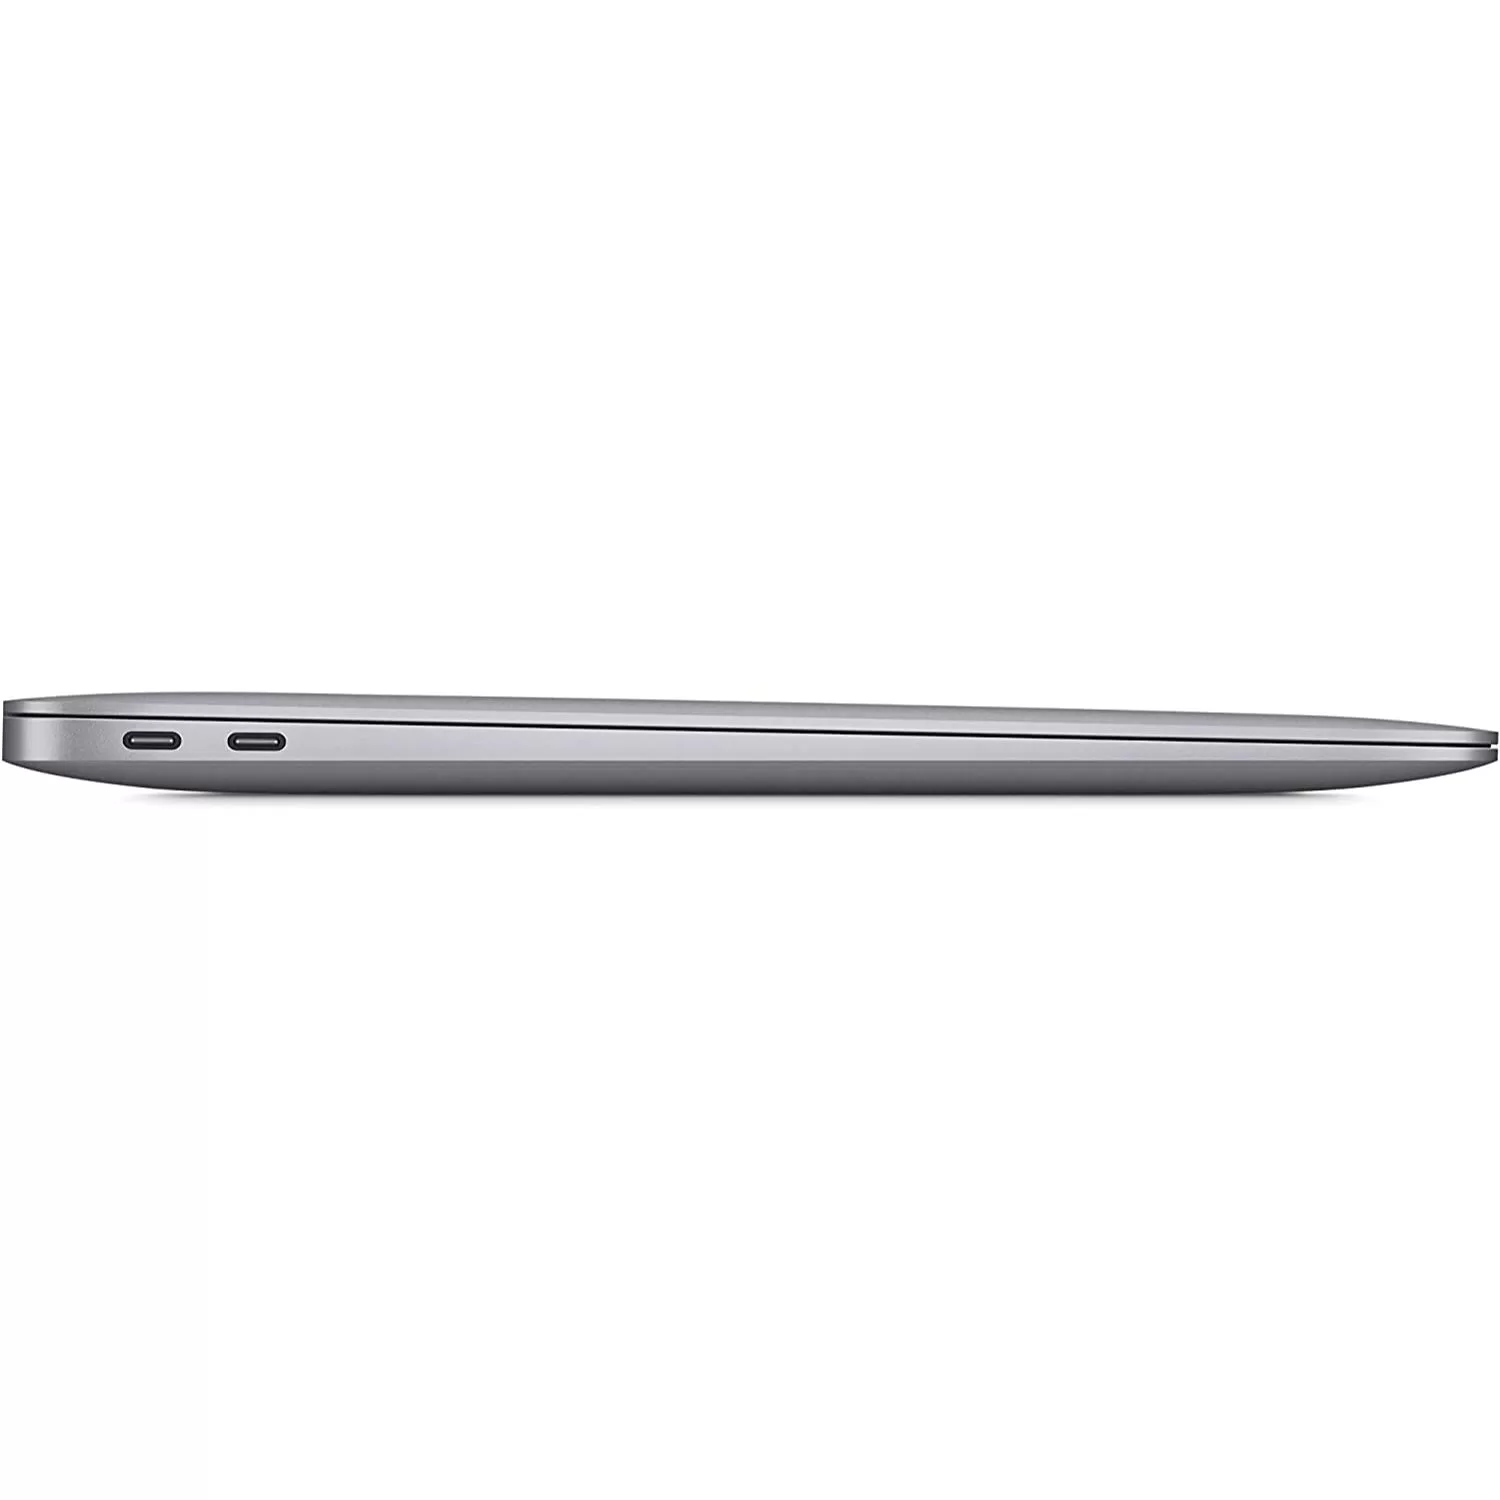 Apple MacBook Air MGN63, M1, 13.3-inch Retina, 8GB, 256GB SSD, Non Active Laptops 11